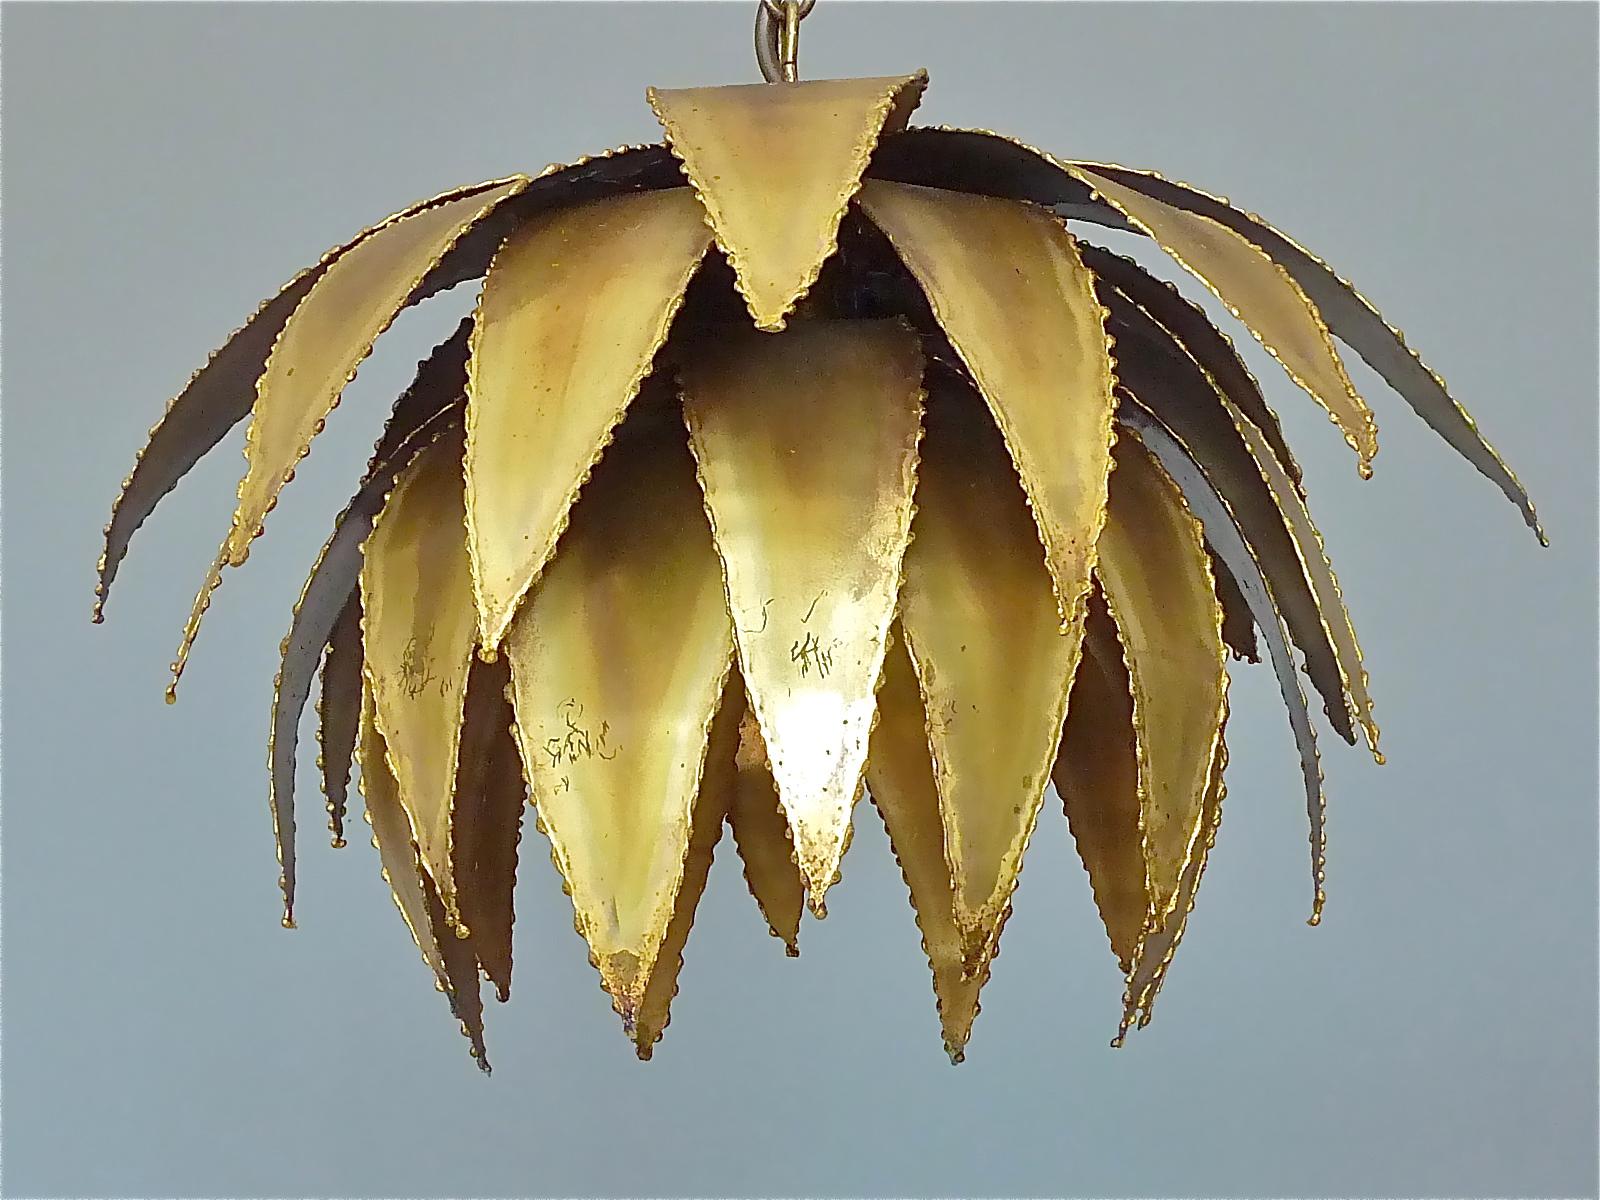 Super rare sculptural french Maison Jansen artichoke palm leaf chandelier or pendant lamp designed by Christian Techoueyres for Maison Jansen, Paris, France circa 1970s. The chain-hanging height-adjustable midcentury light which is 120 cm / 47.24